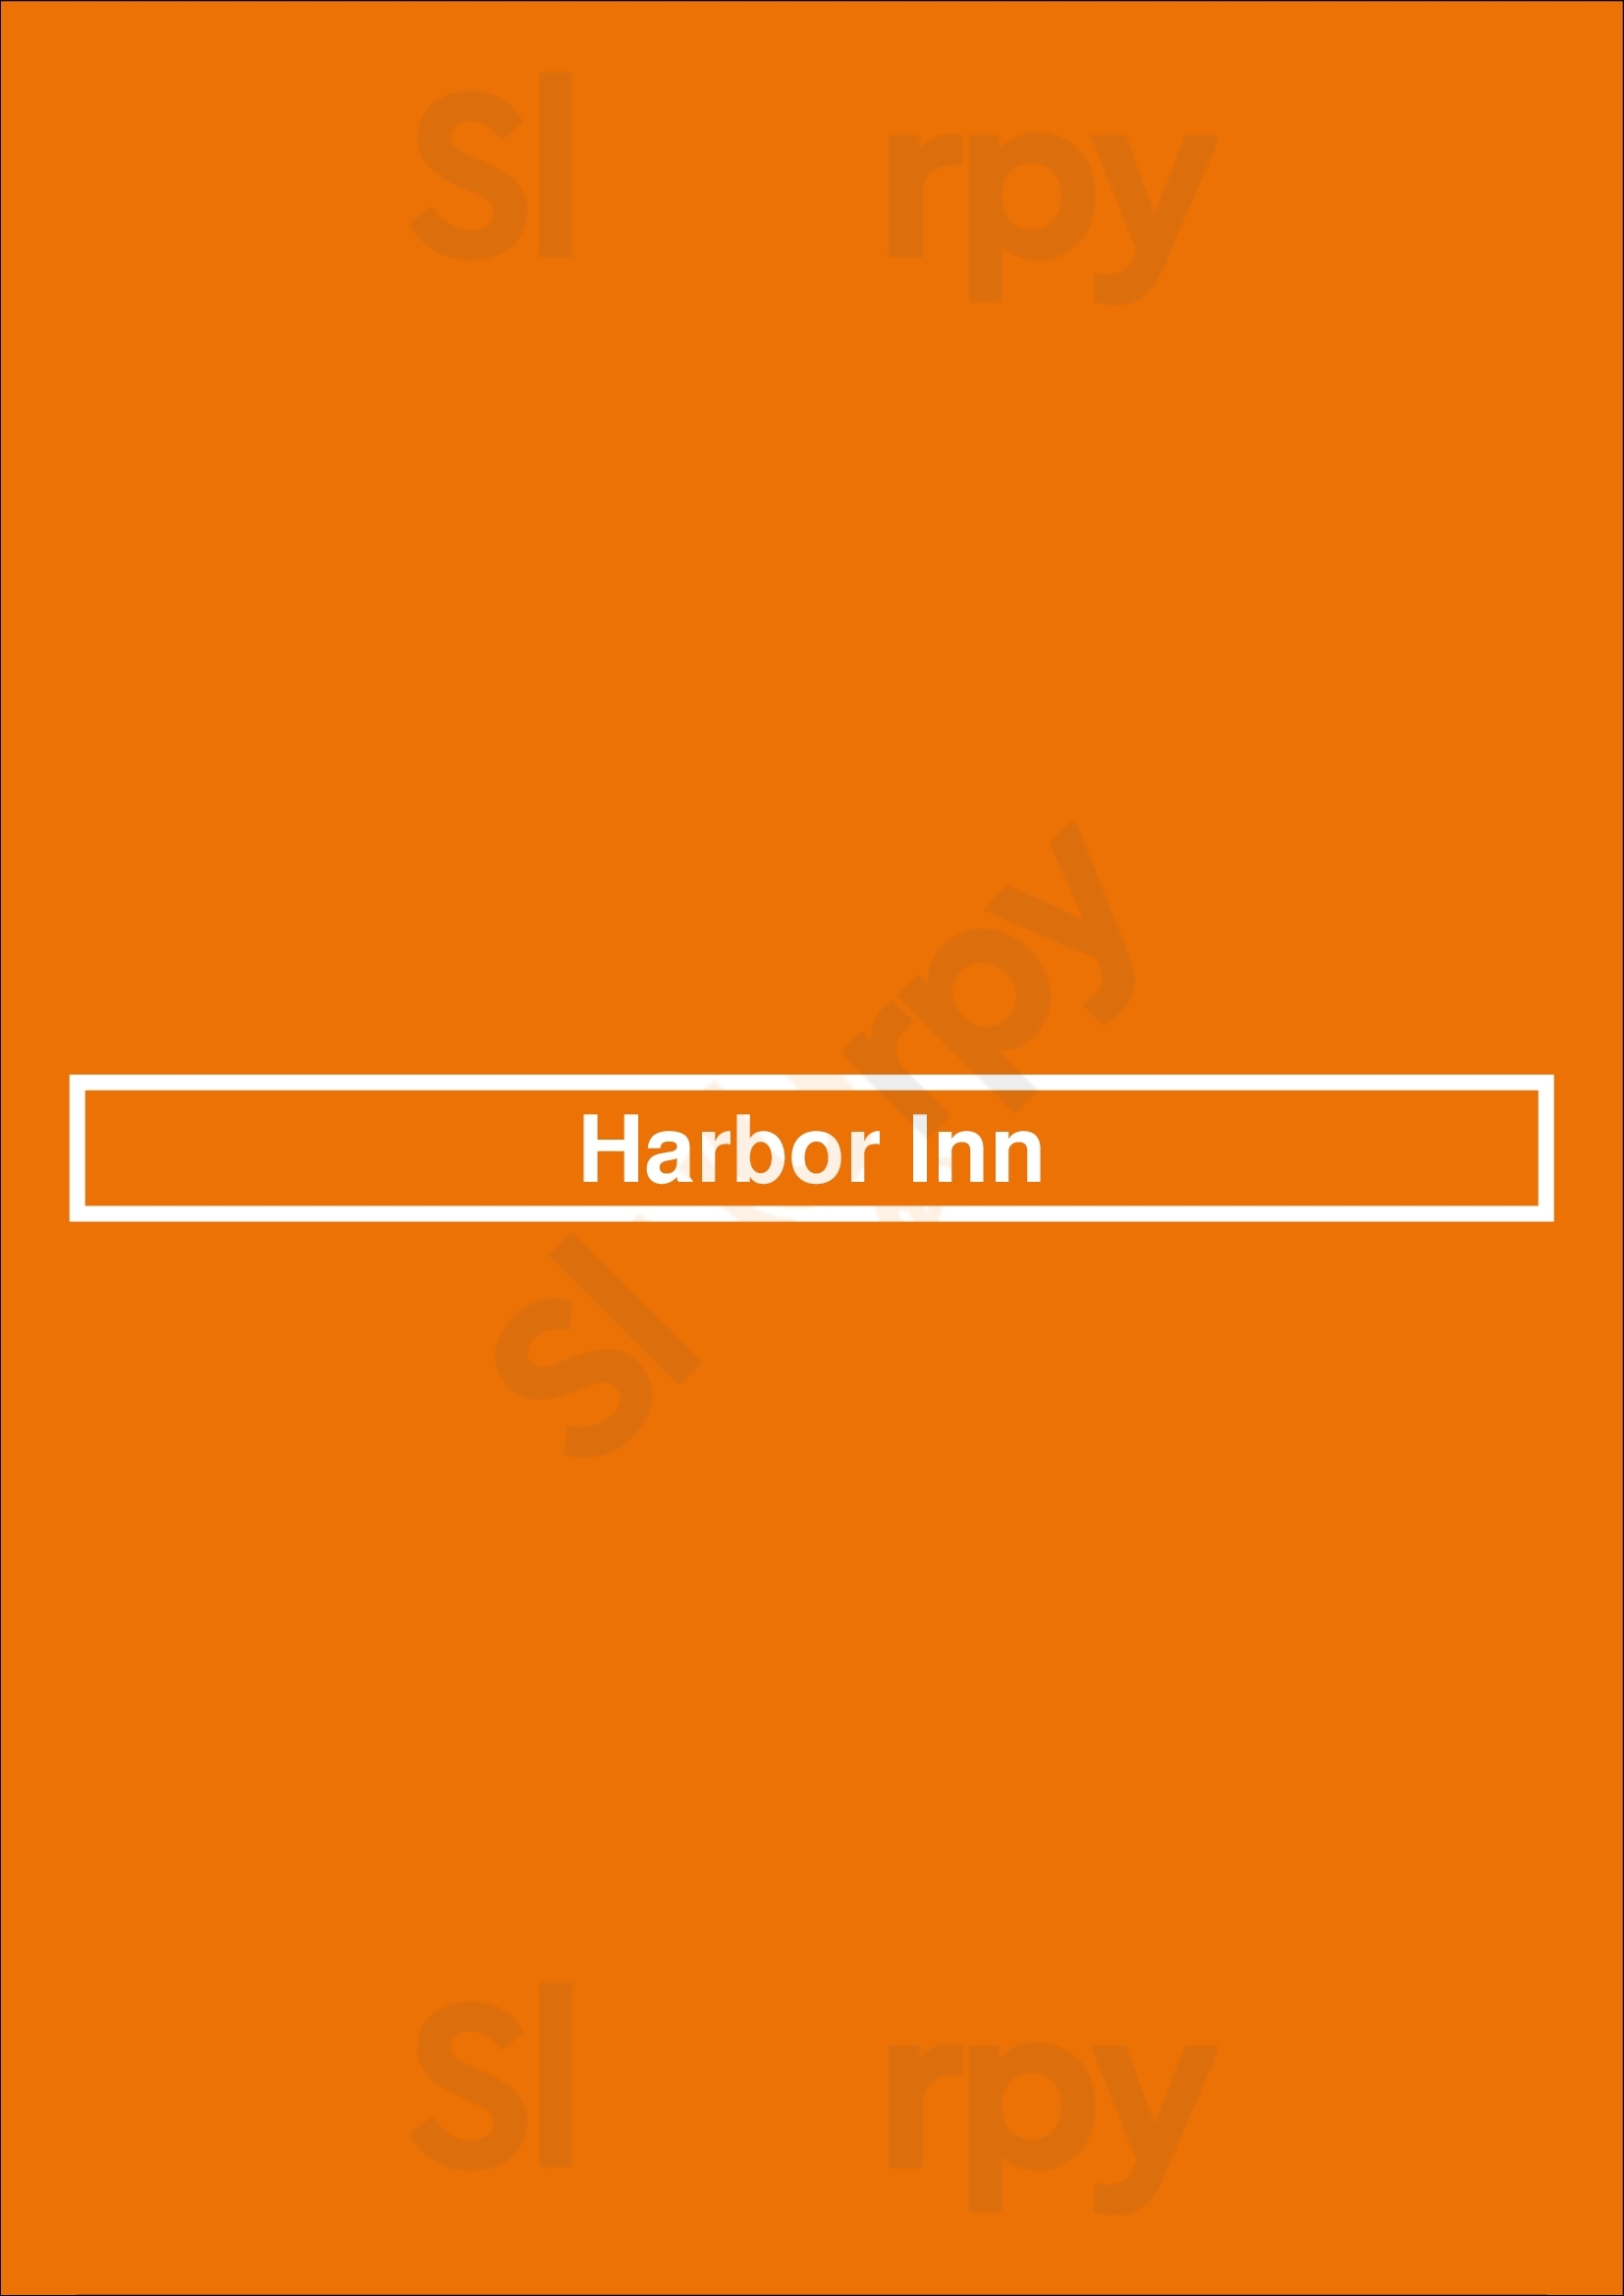 Harbor Inn Charlotte Menu - 1